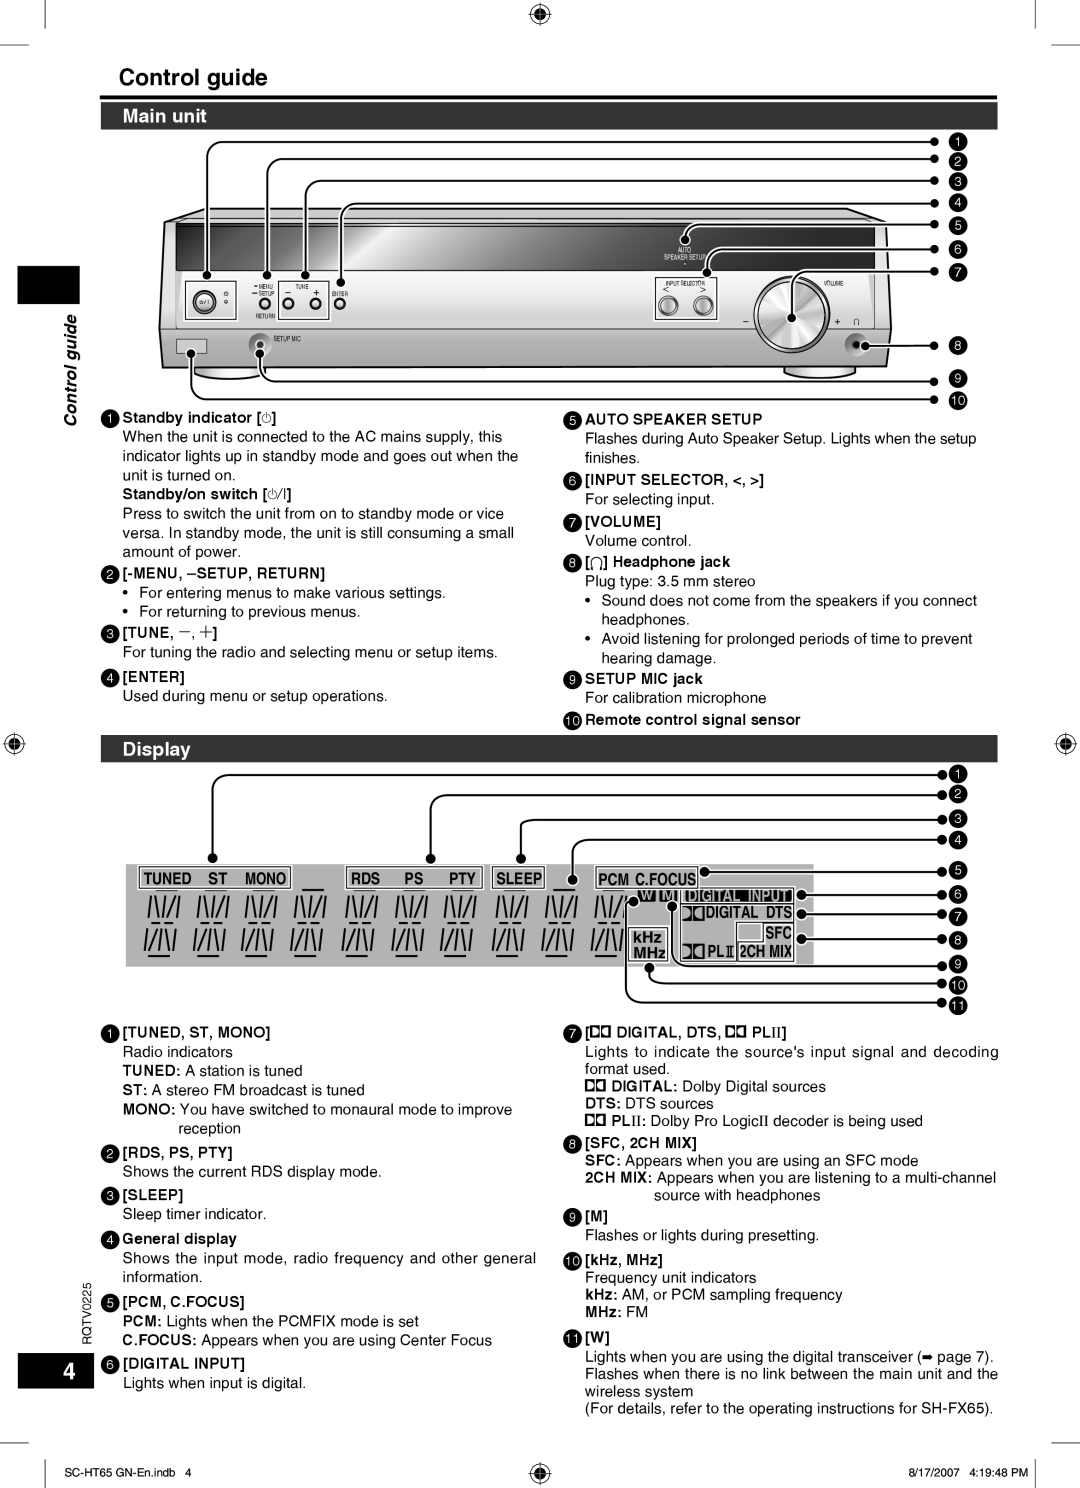 Panasonic SC-HT65 manual Main unit, Display, Control guide, Digital Dts, PL 2CH MIX, Enter, SETUP MIC jack 